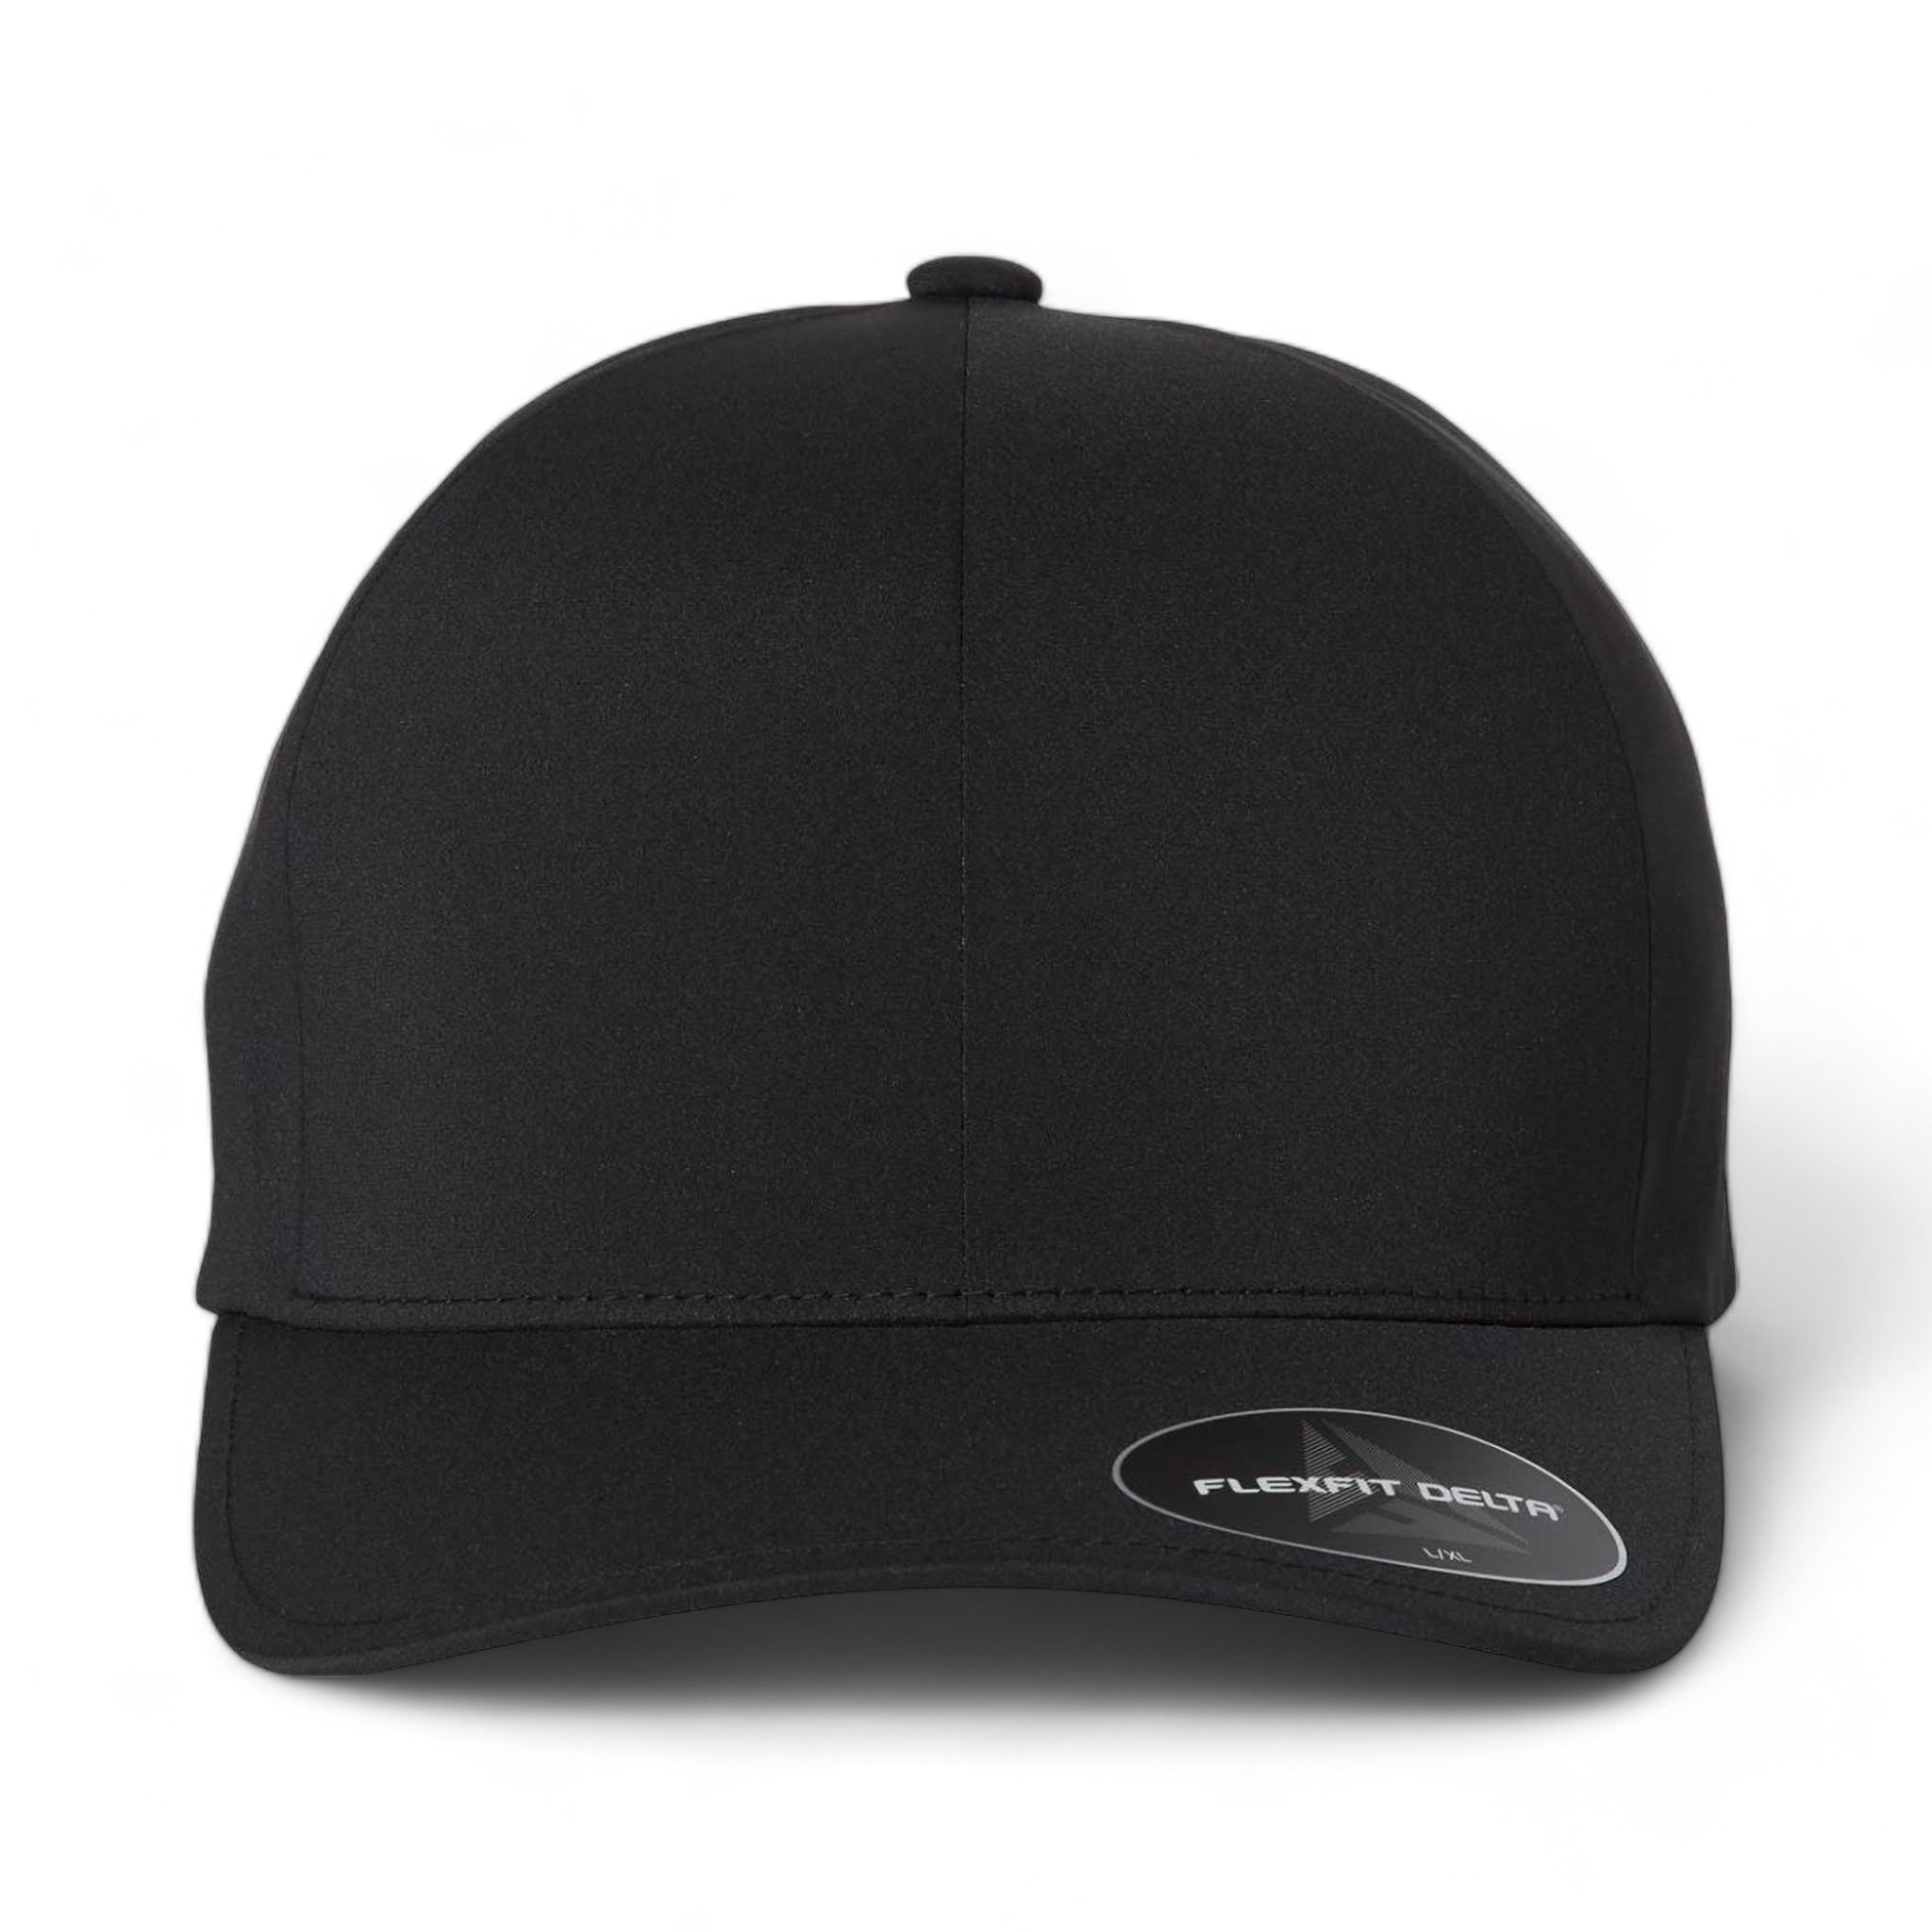 Front view of Flexfit 180 custom hat in black